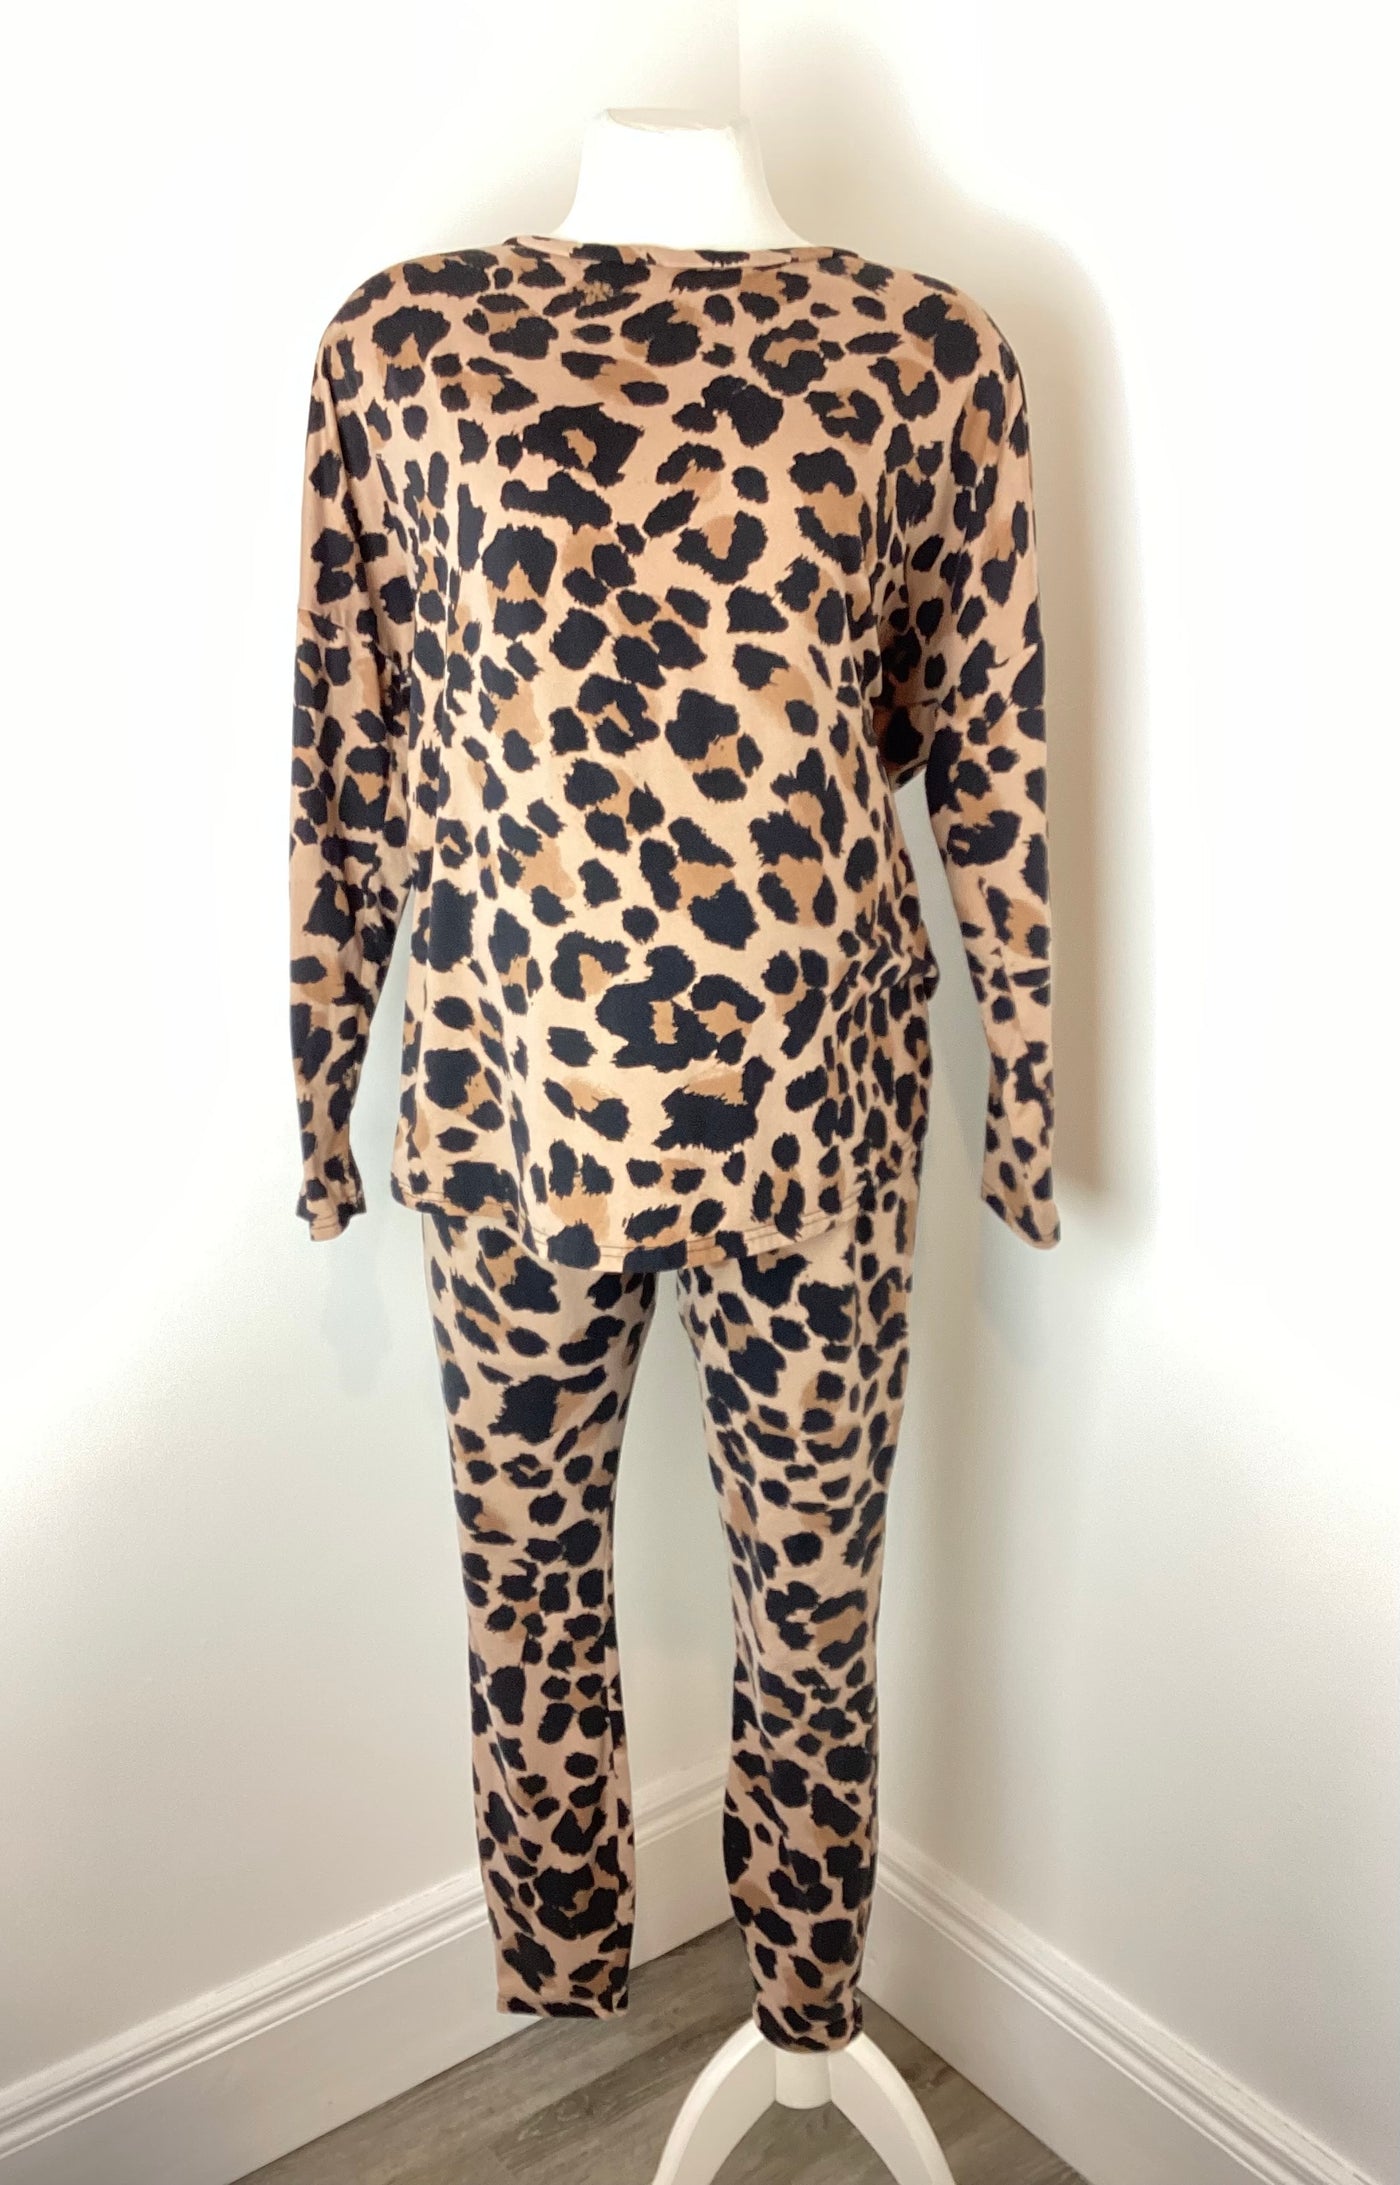 New Look Maternity black & tan animal print pyjamas - Size M (Approx UK 10/12)